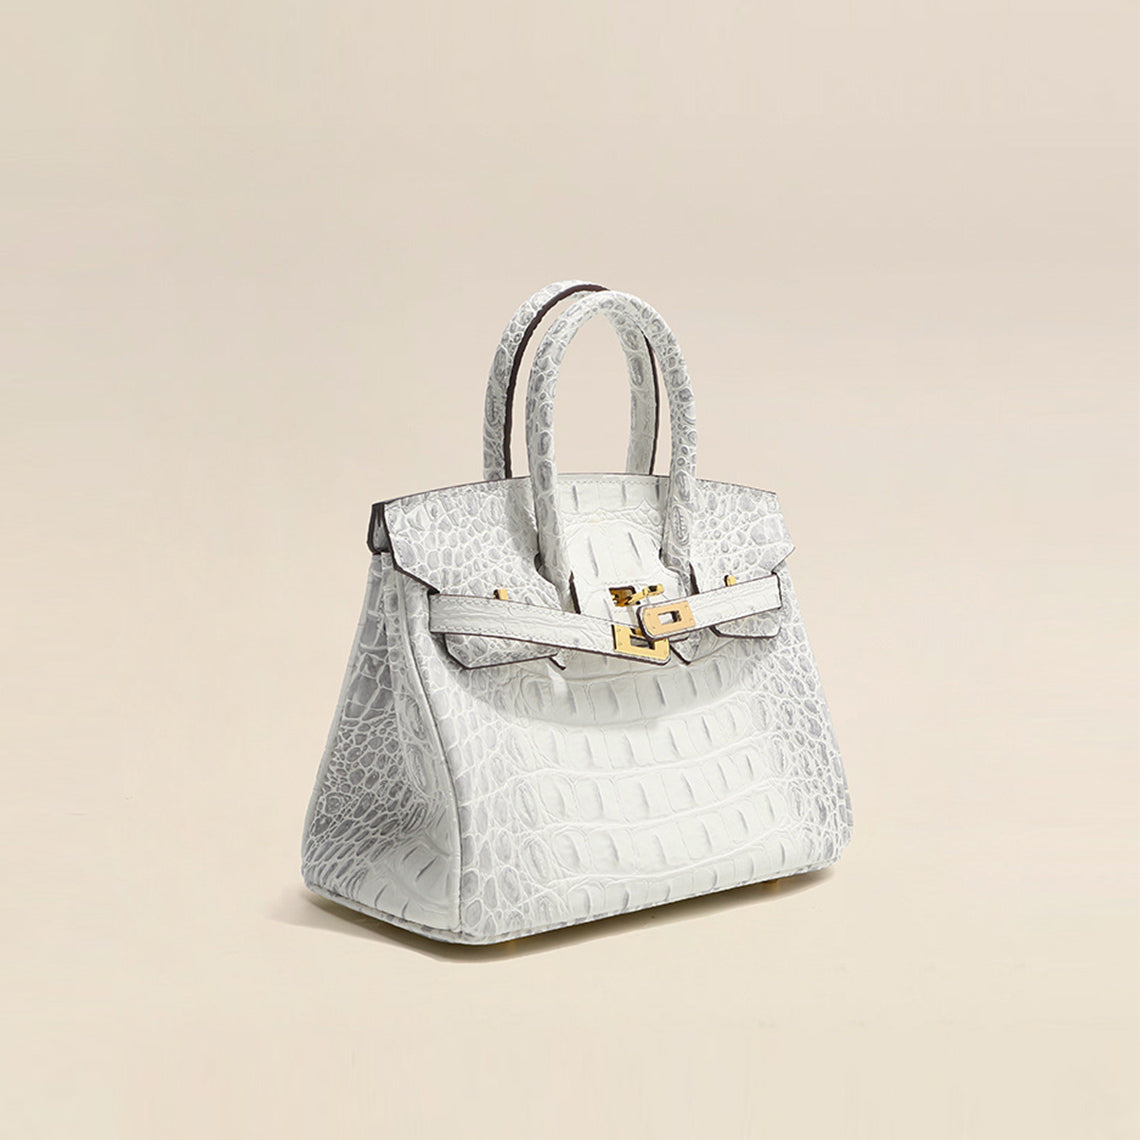 White Leather Handbag | Crocodile Print Leather Bag for Women - POPSEWING™